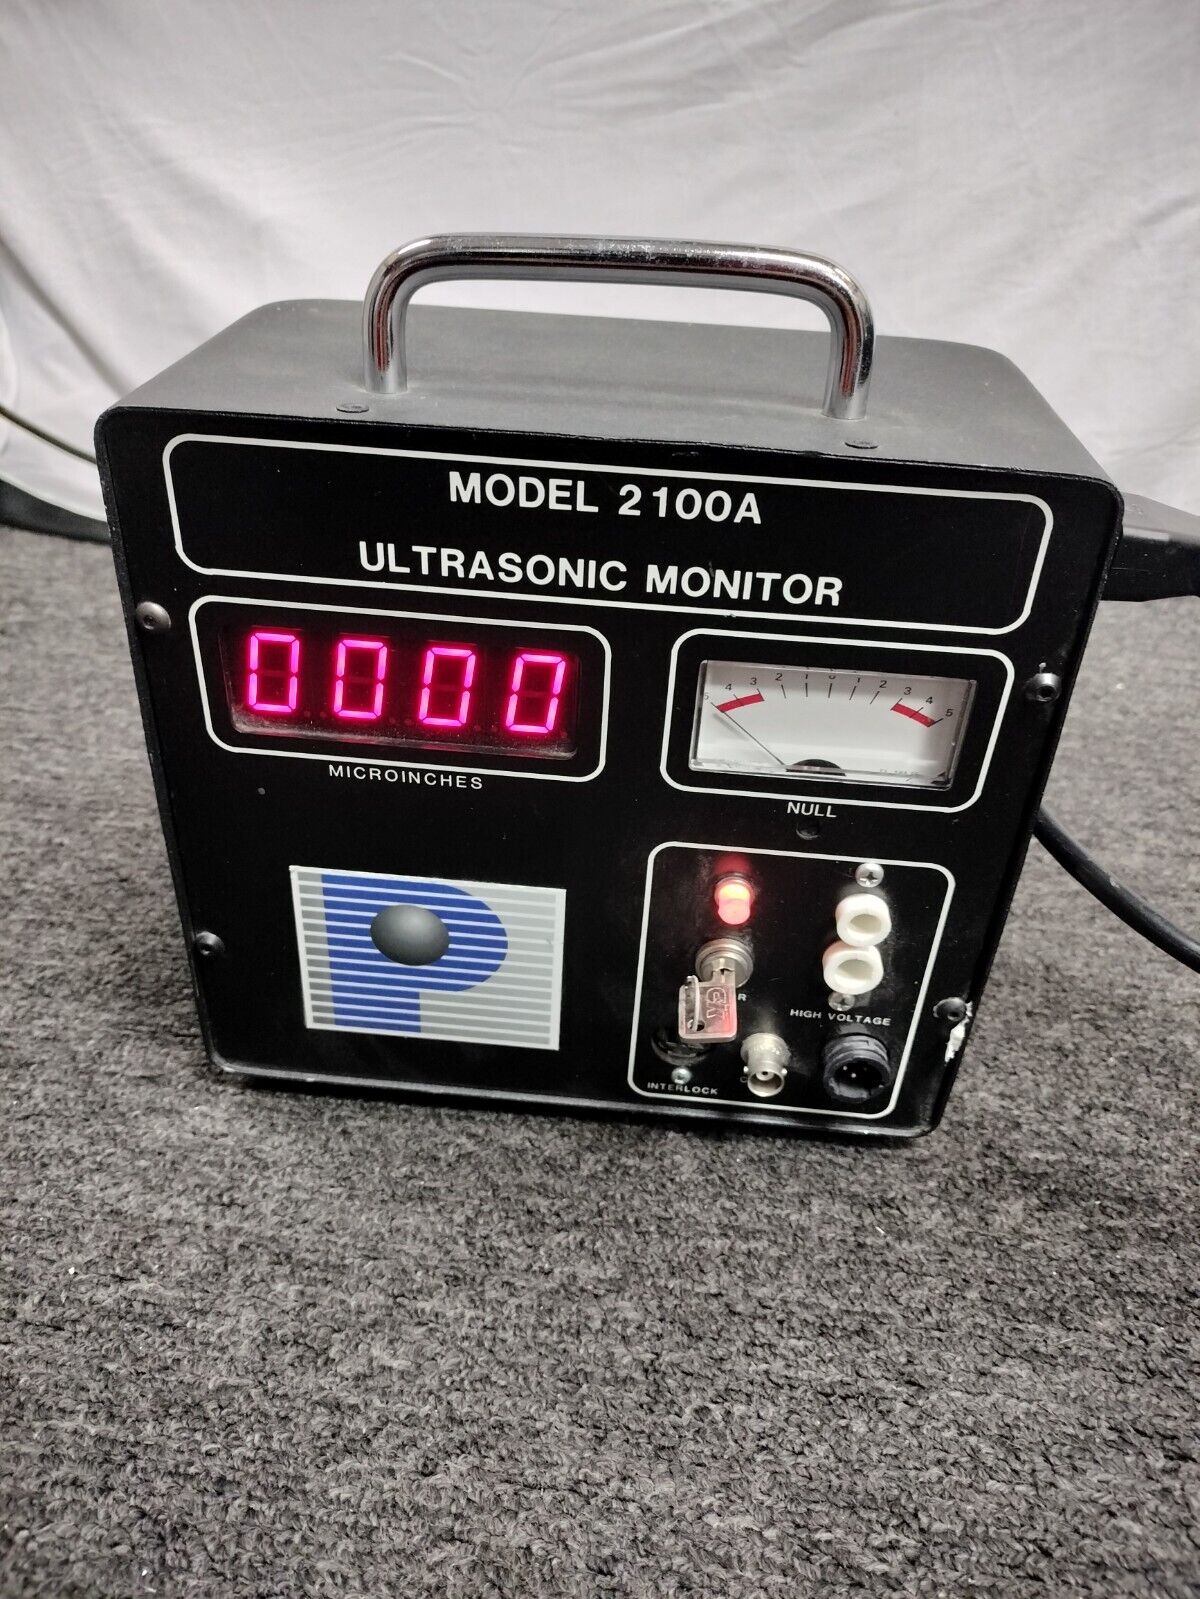 Palomar Poducts Inc. (Model#2100A) Ultrasonic Monitor